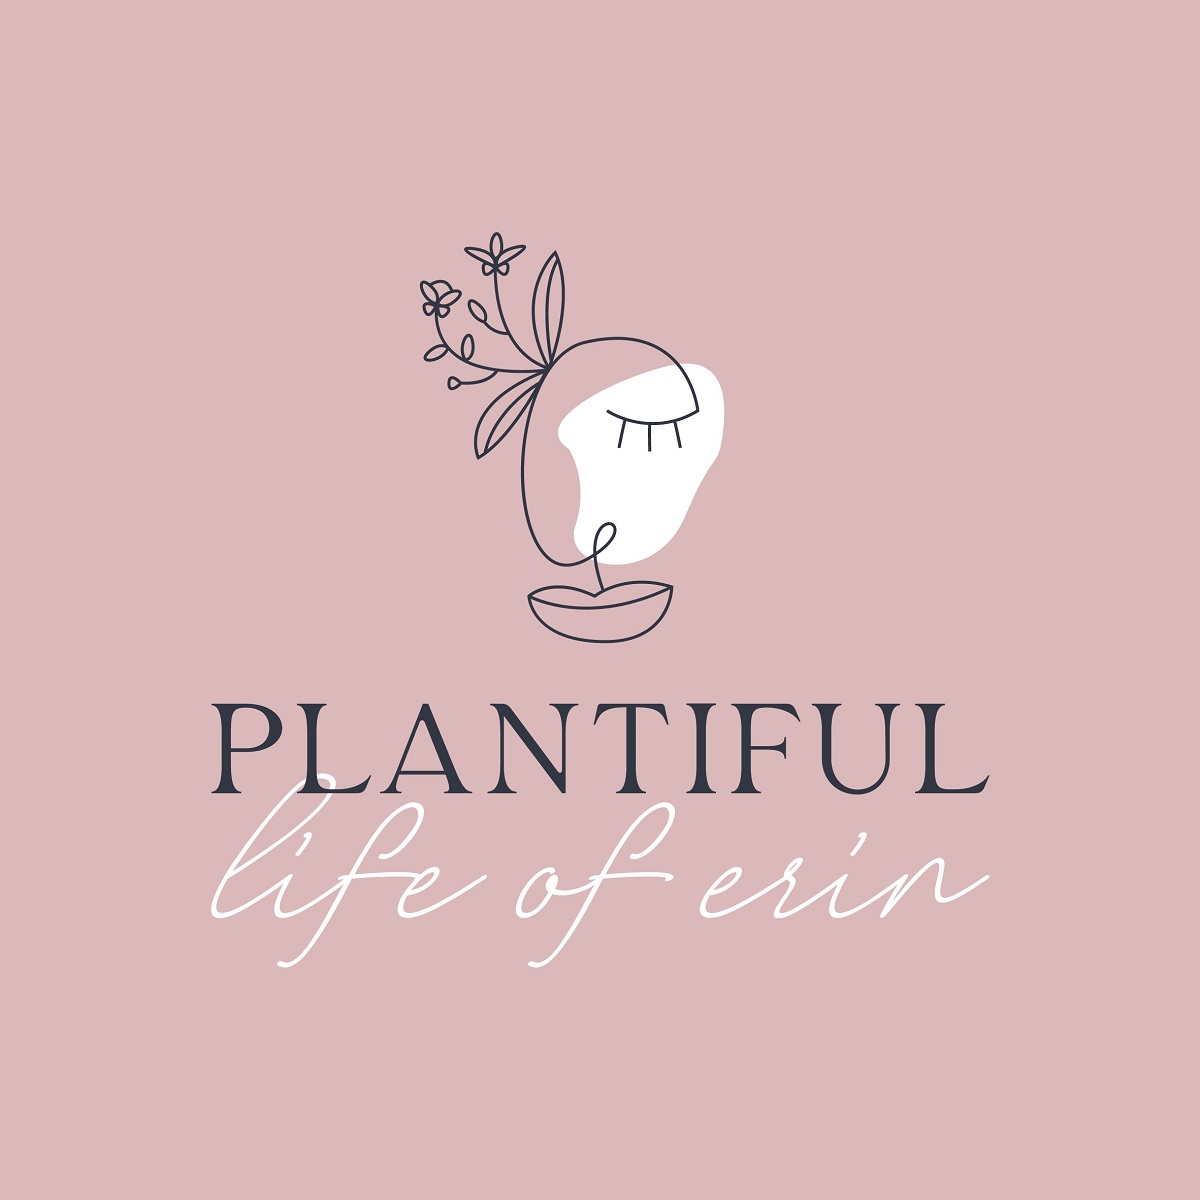 Landscapes, Typography, Plant Life, Fashion, Pale Pink, Seppia, Plantiful Life of Erin Artworks